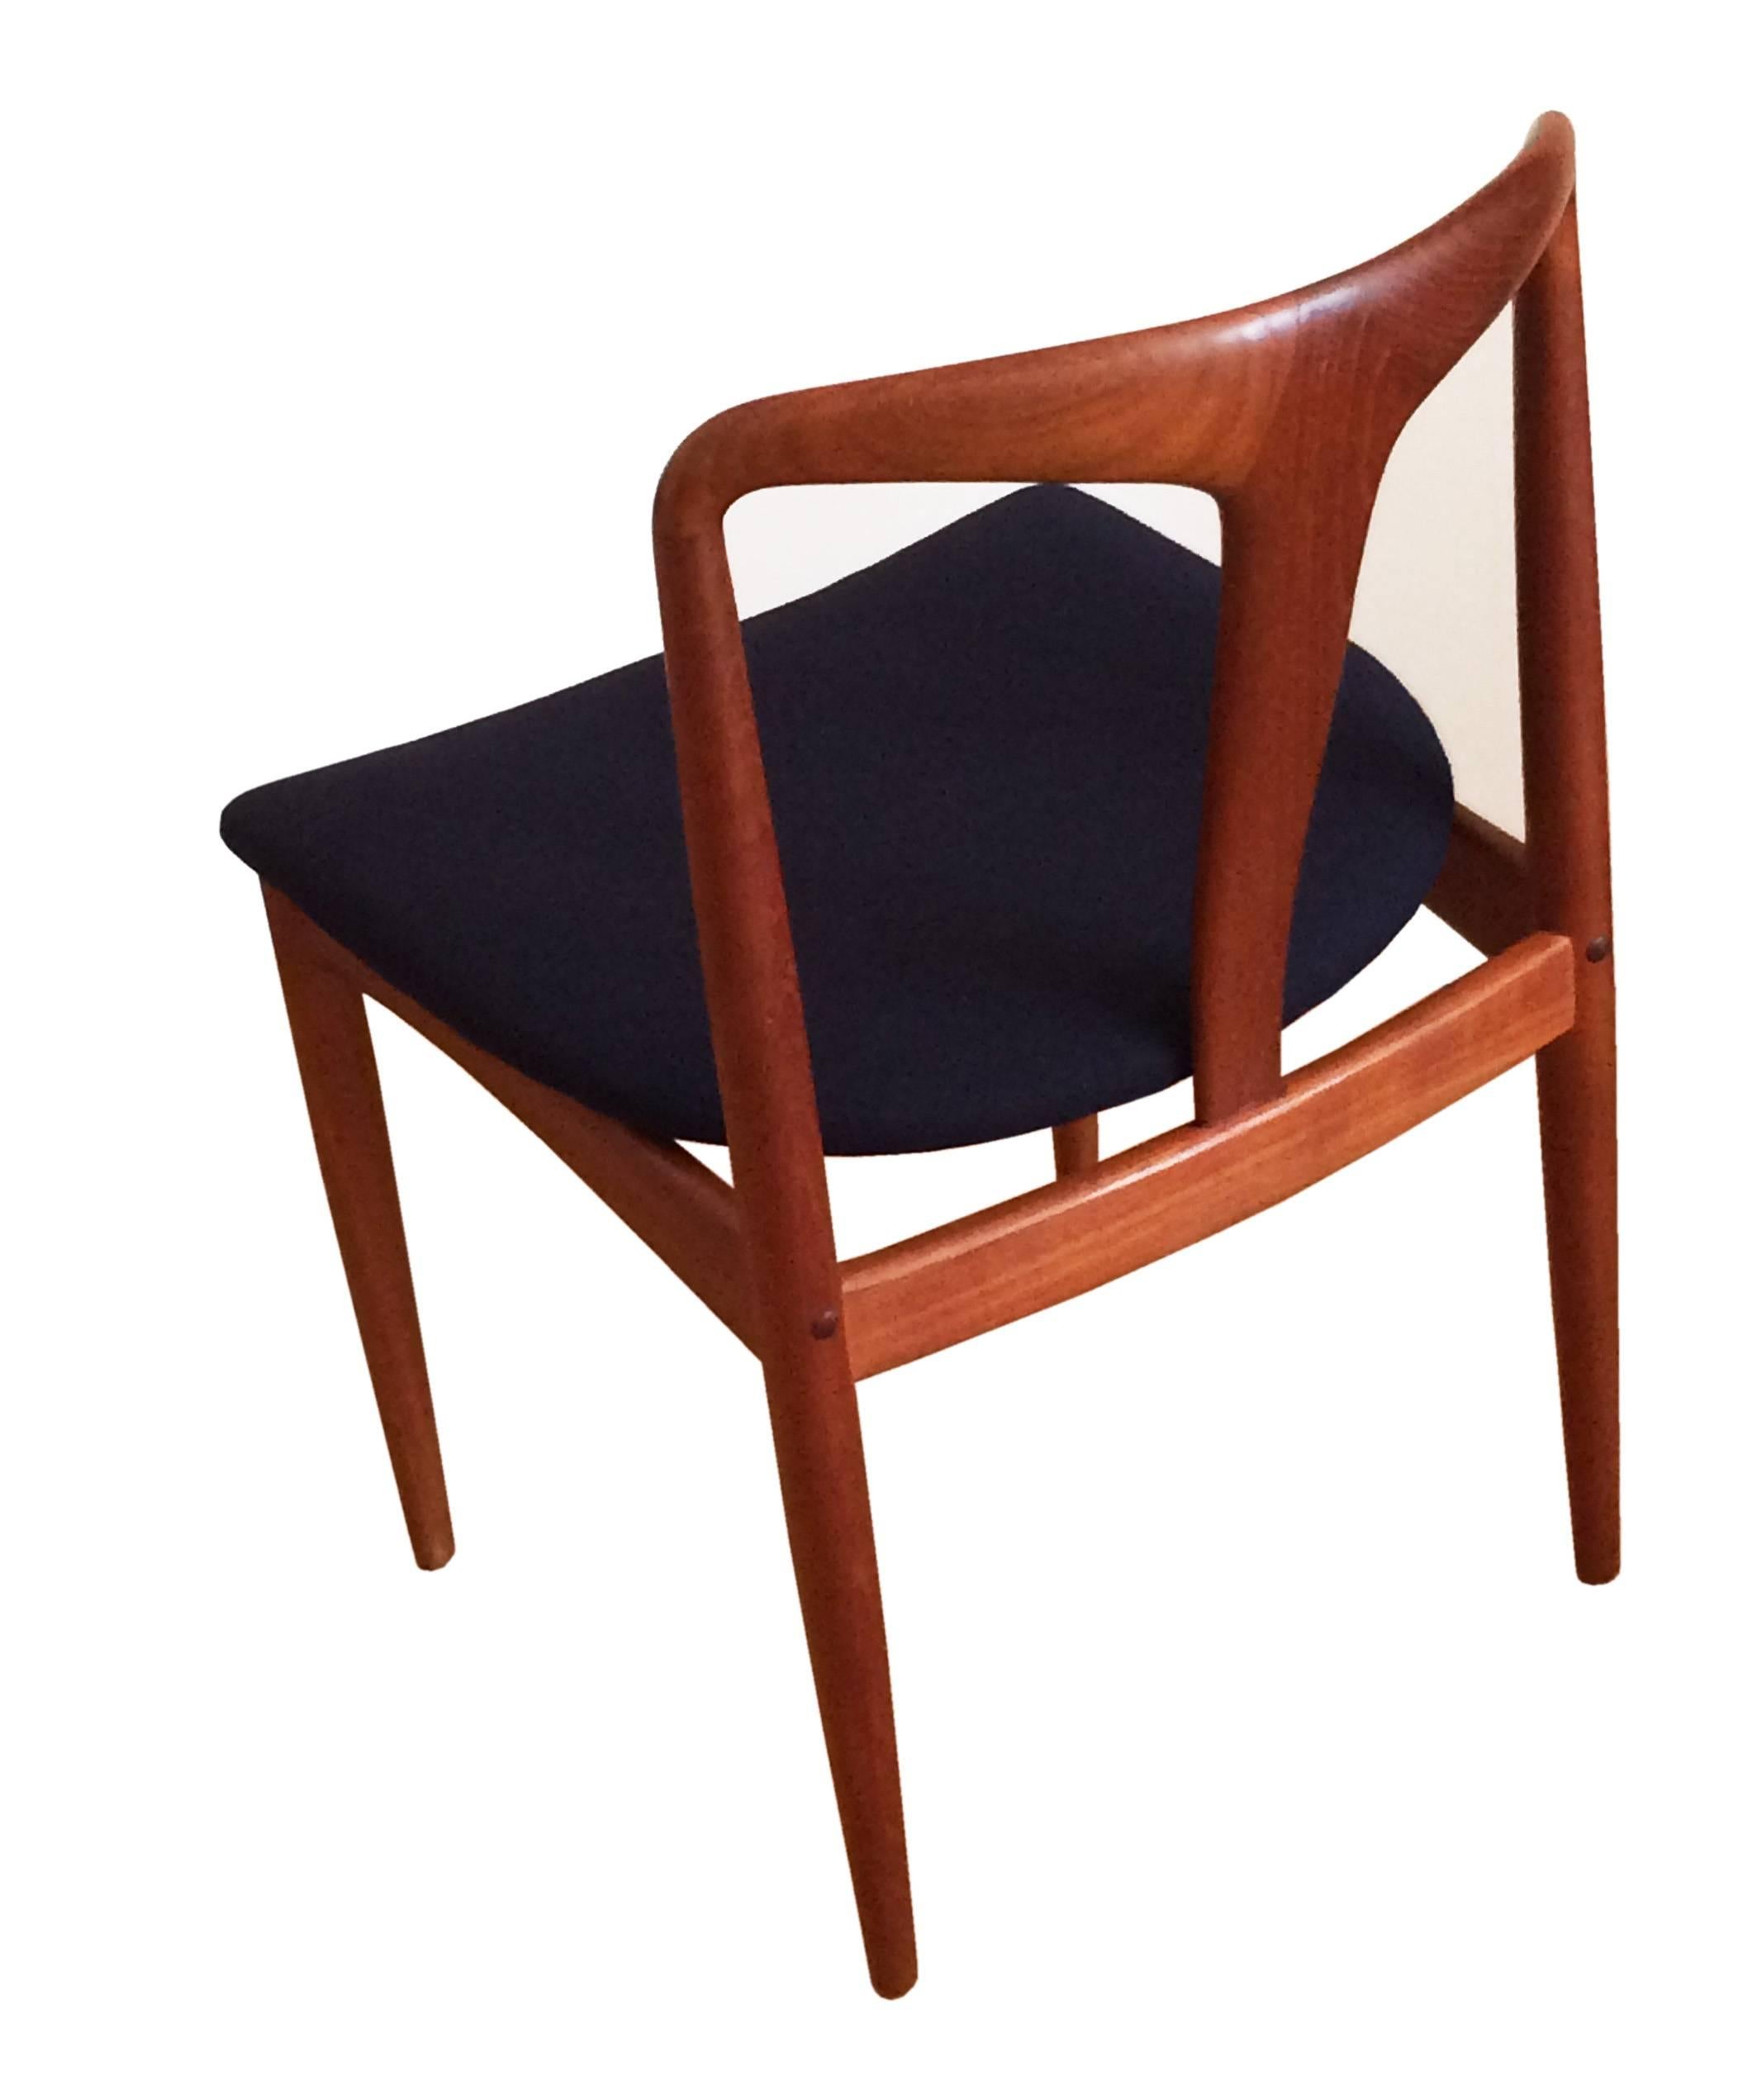 20th Century Danish Mid-Century Teak Juliane Chair by Johannes Andersen for Uldum, 1960s For Sale